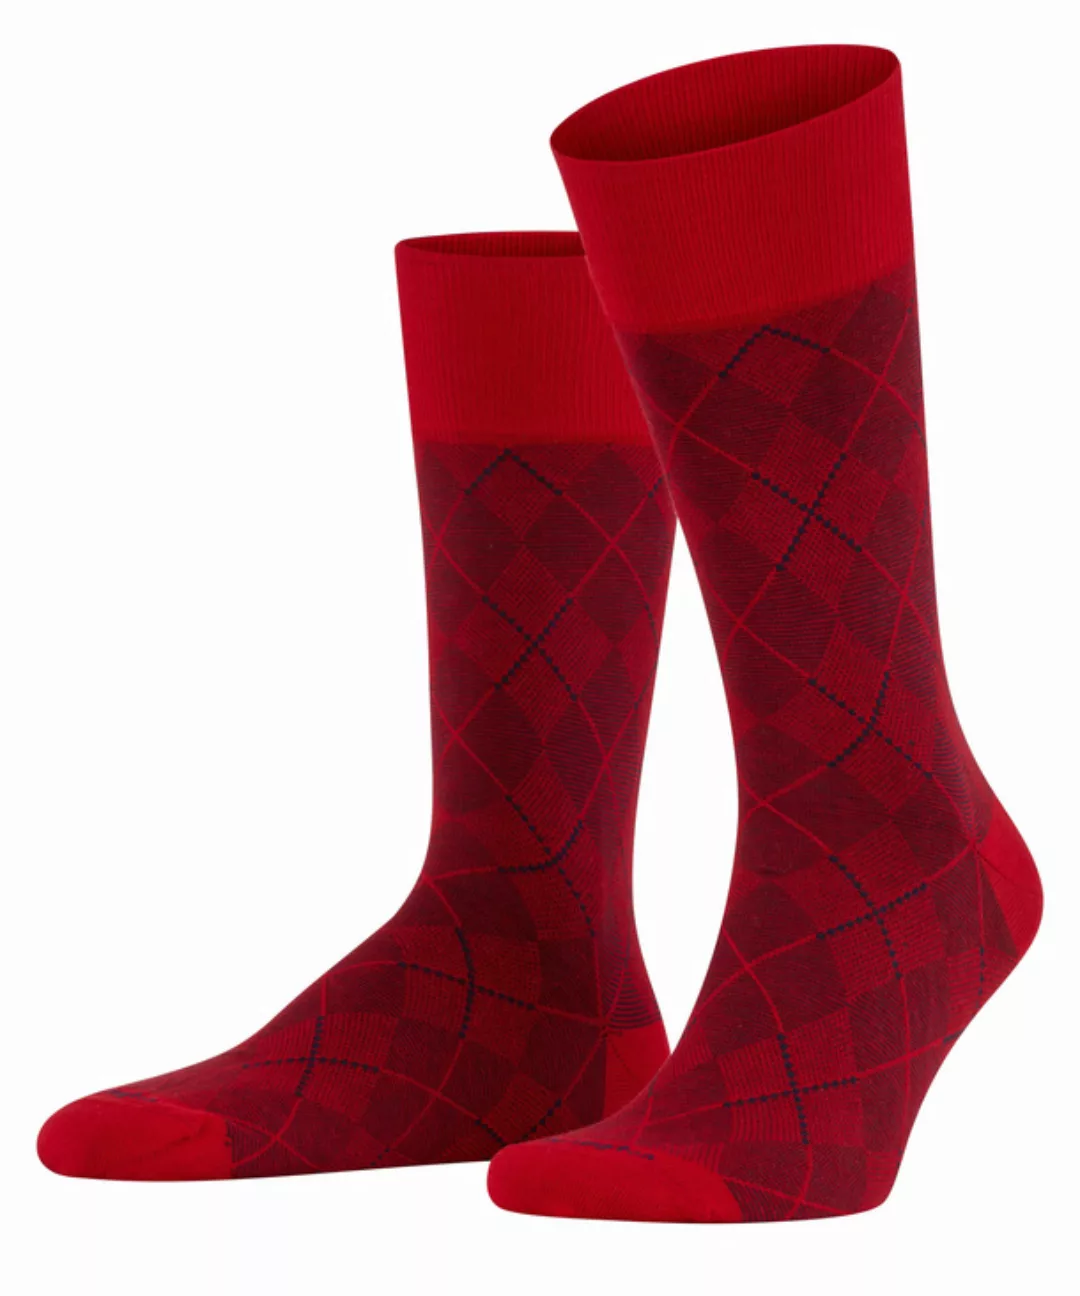 Burlington Carrington Herren Socken, 40-46, Rot, Raute, Baumwolle, 21061-80 günstig online kaufen